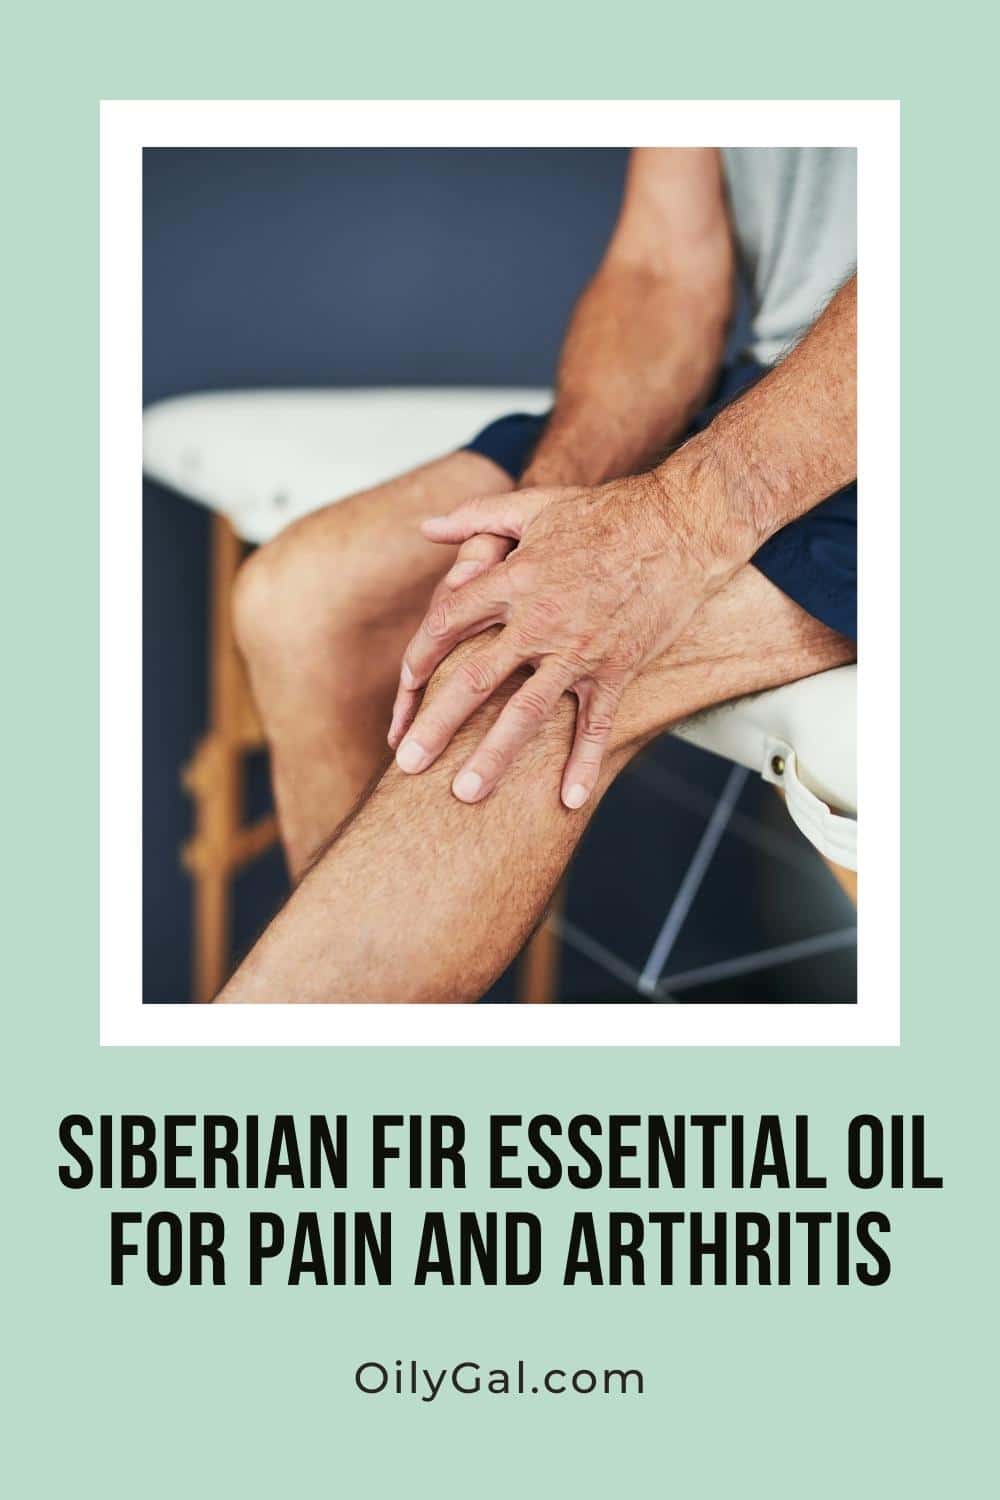 Siberian Fir Essential Oil For Pain and Arthritis